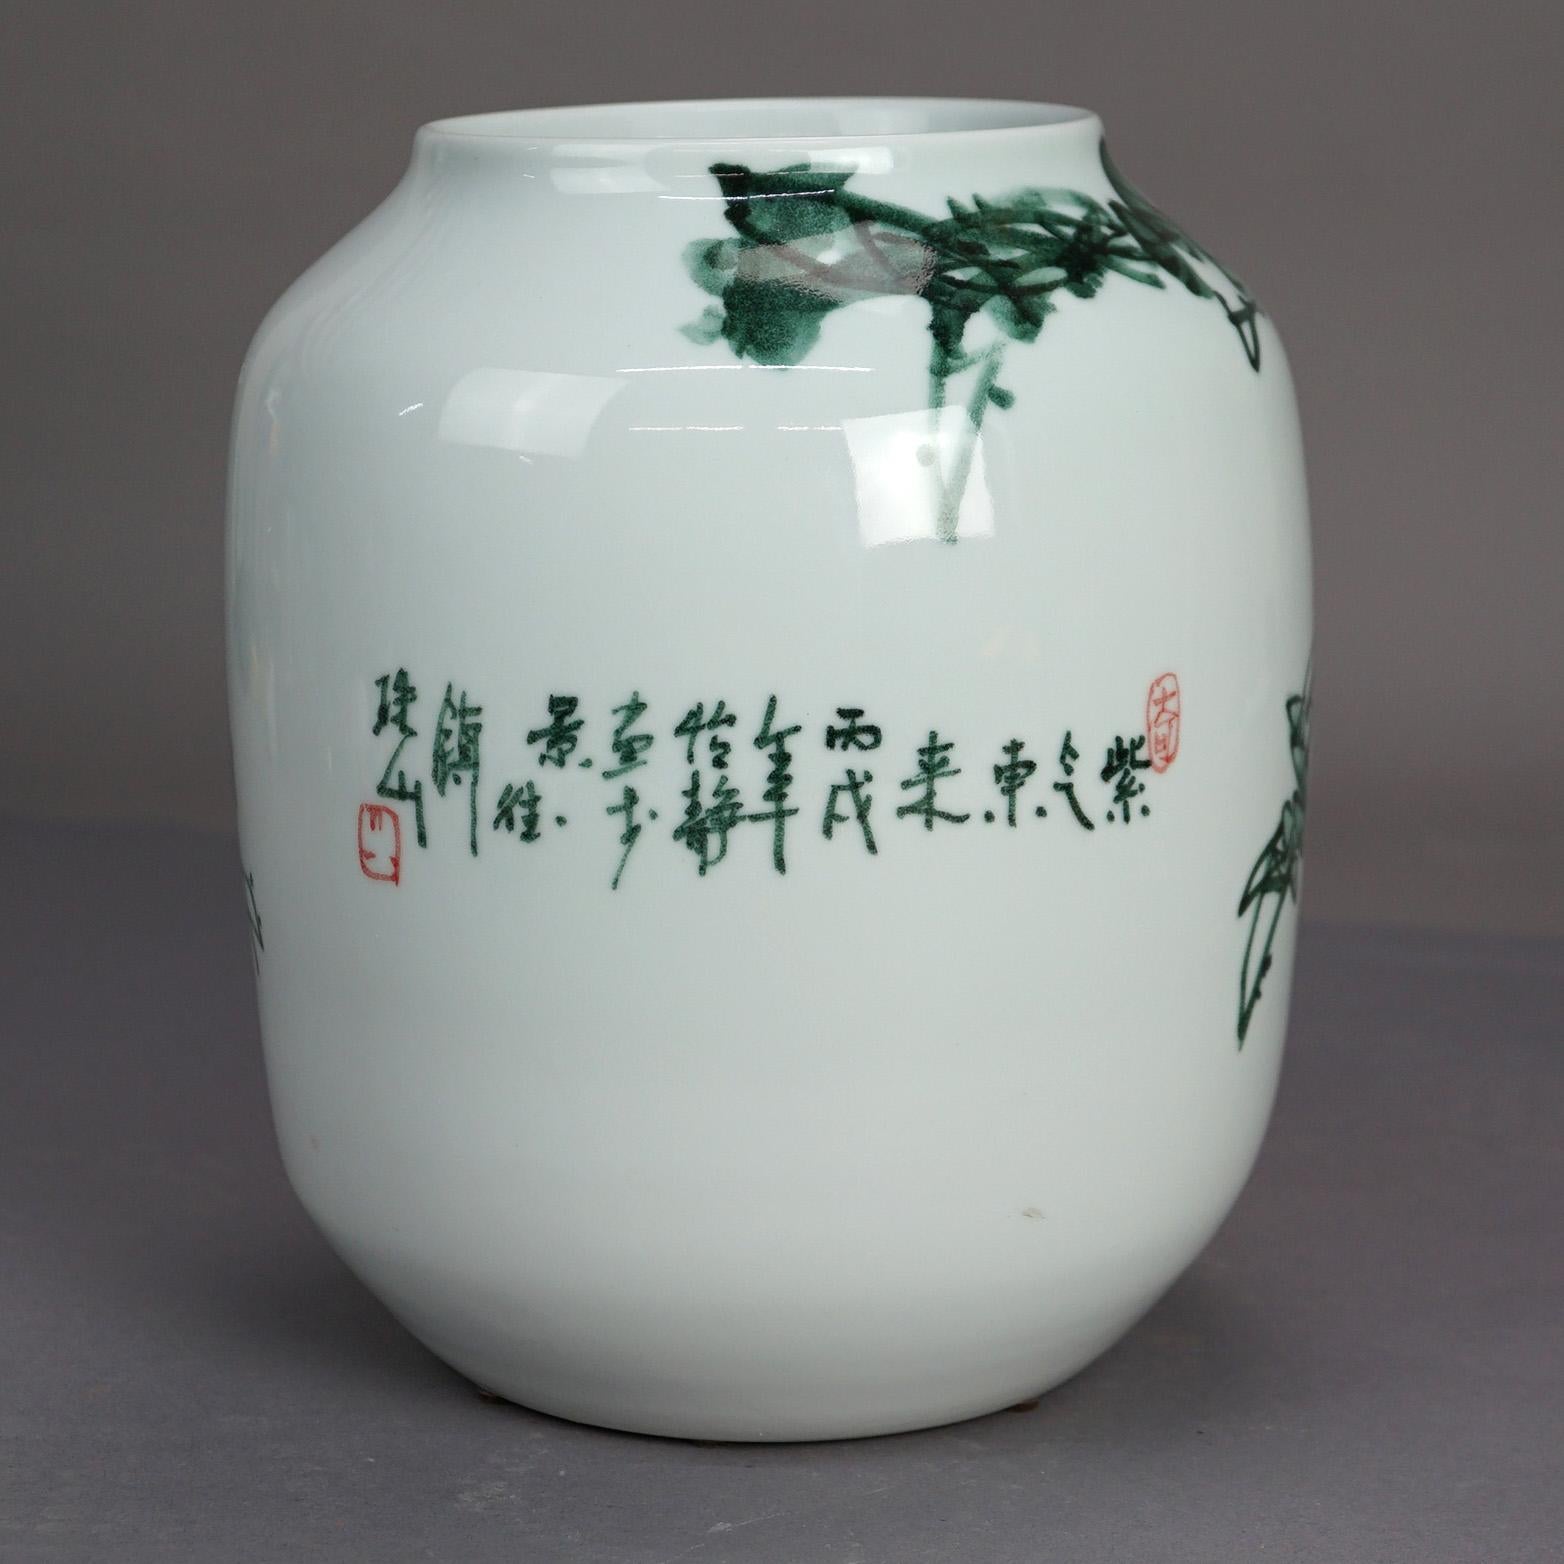 Chinese Jingdezhen Porcelain Jar Vase with Hand Painted Myrtle Design, en verso Characters 20thC

Measures- 11.5''H x 9.5''W x 9.5''D